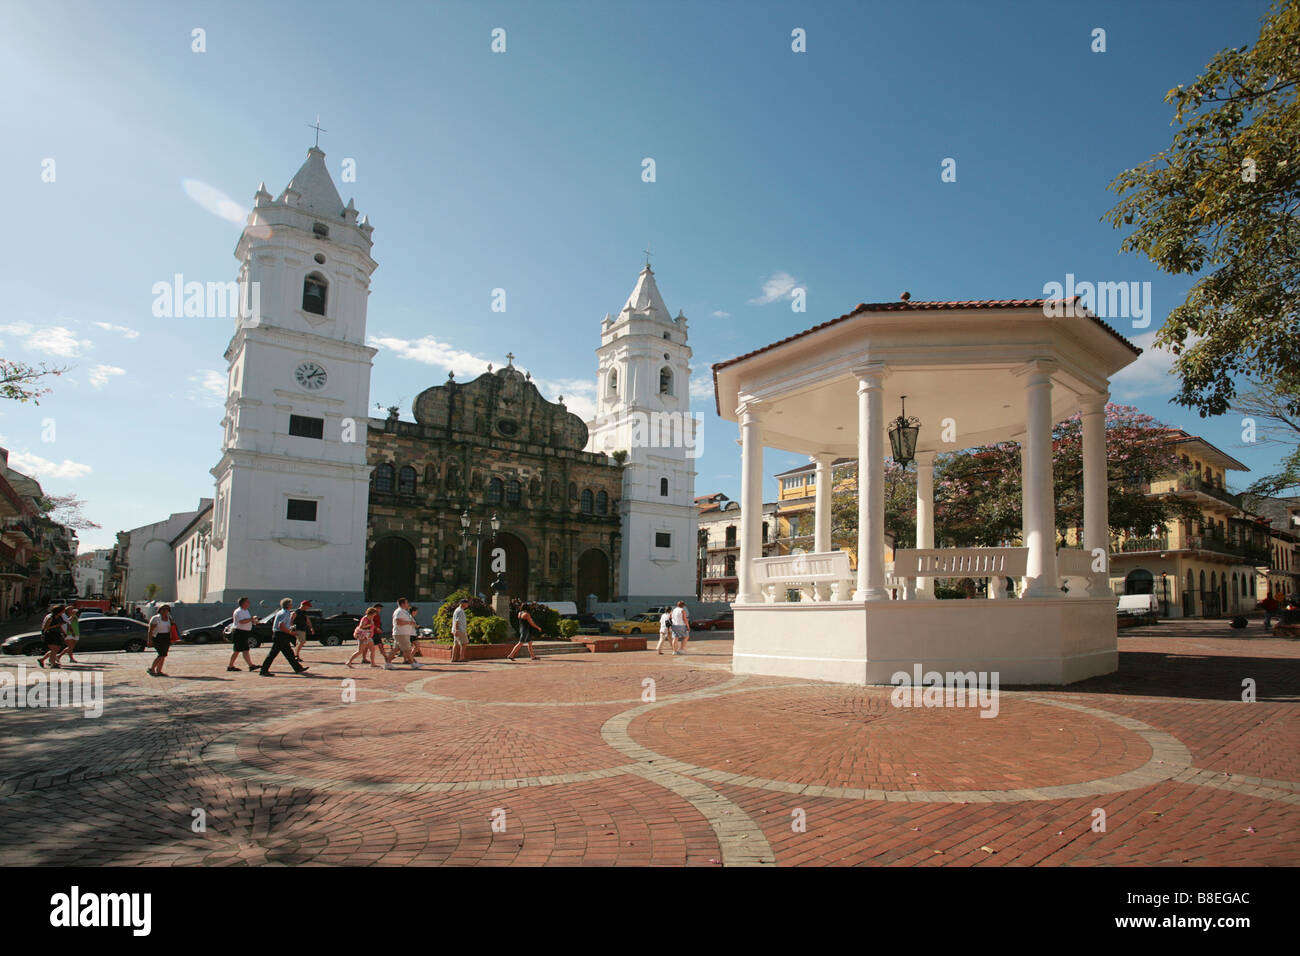 Plaza Catedral of the Casco Antiguo of Panama City Stock Photo - Alamy